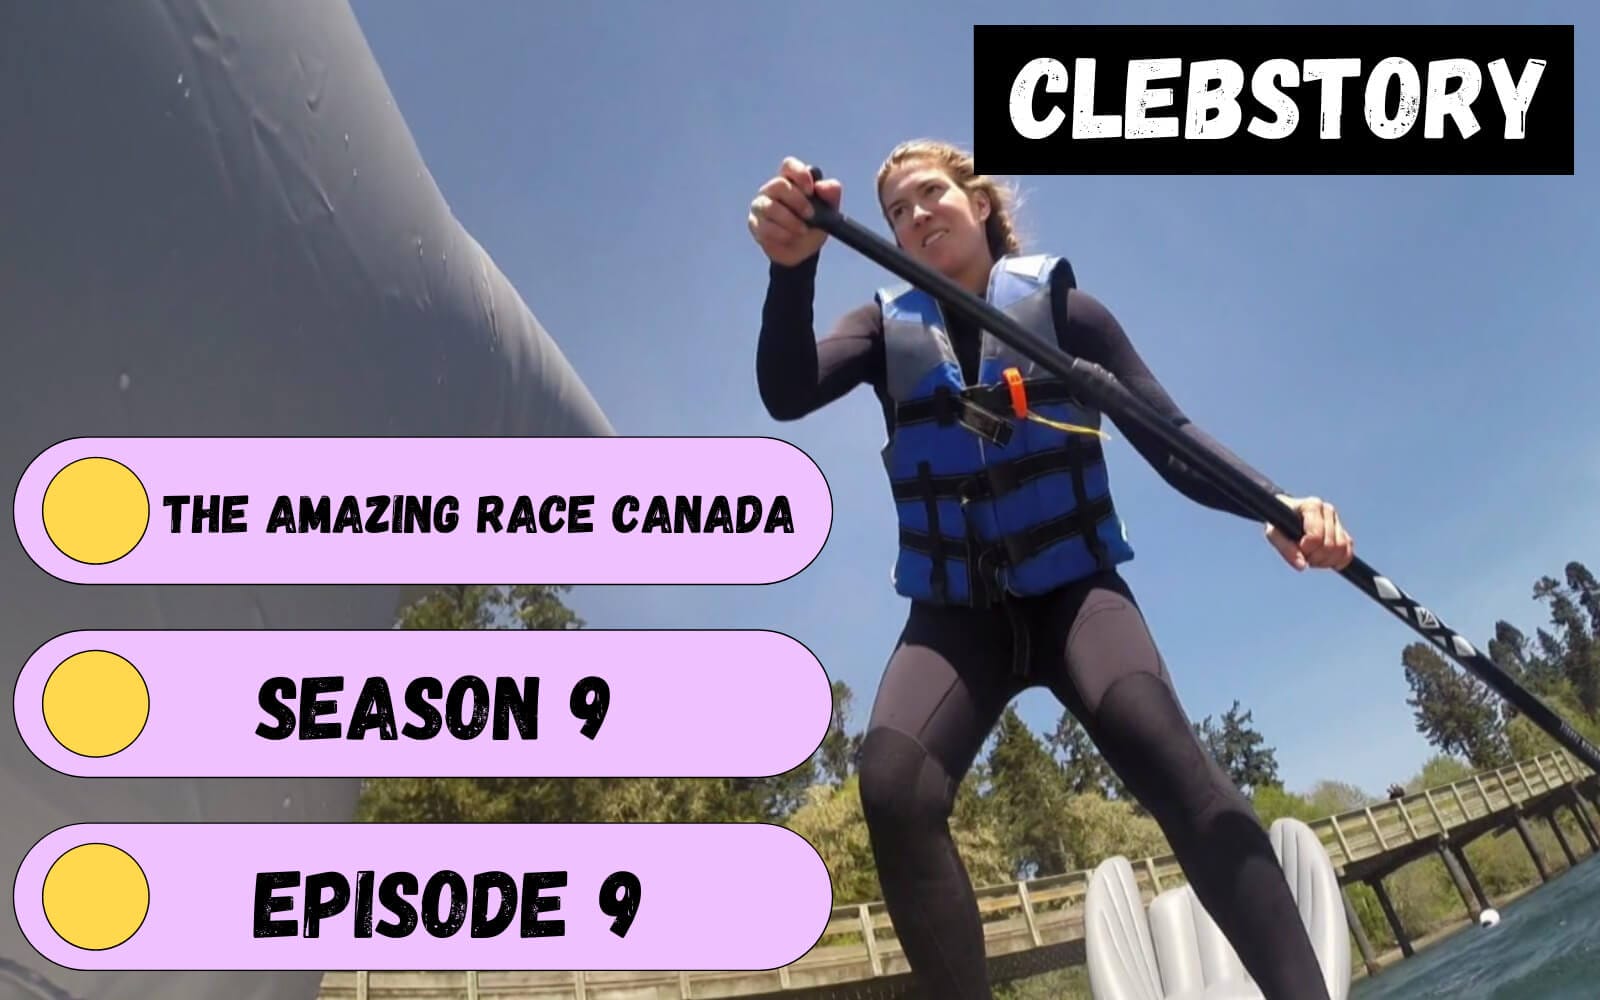 The Amazing Race Canada Season 9 Episode 9